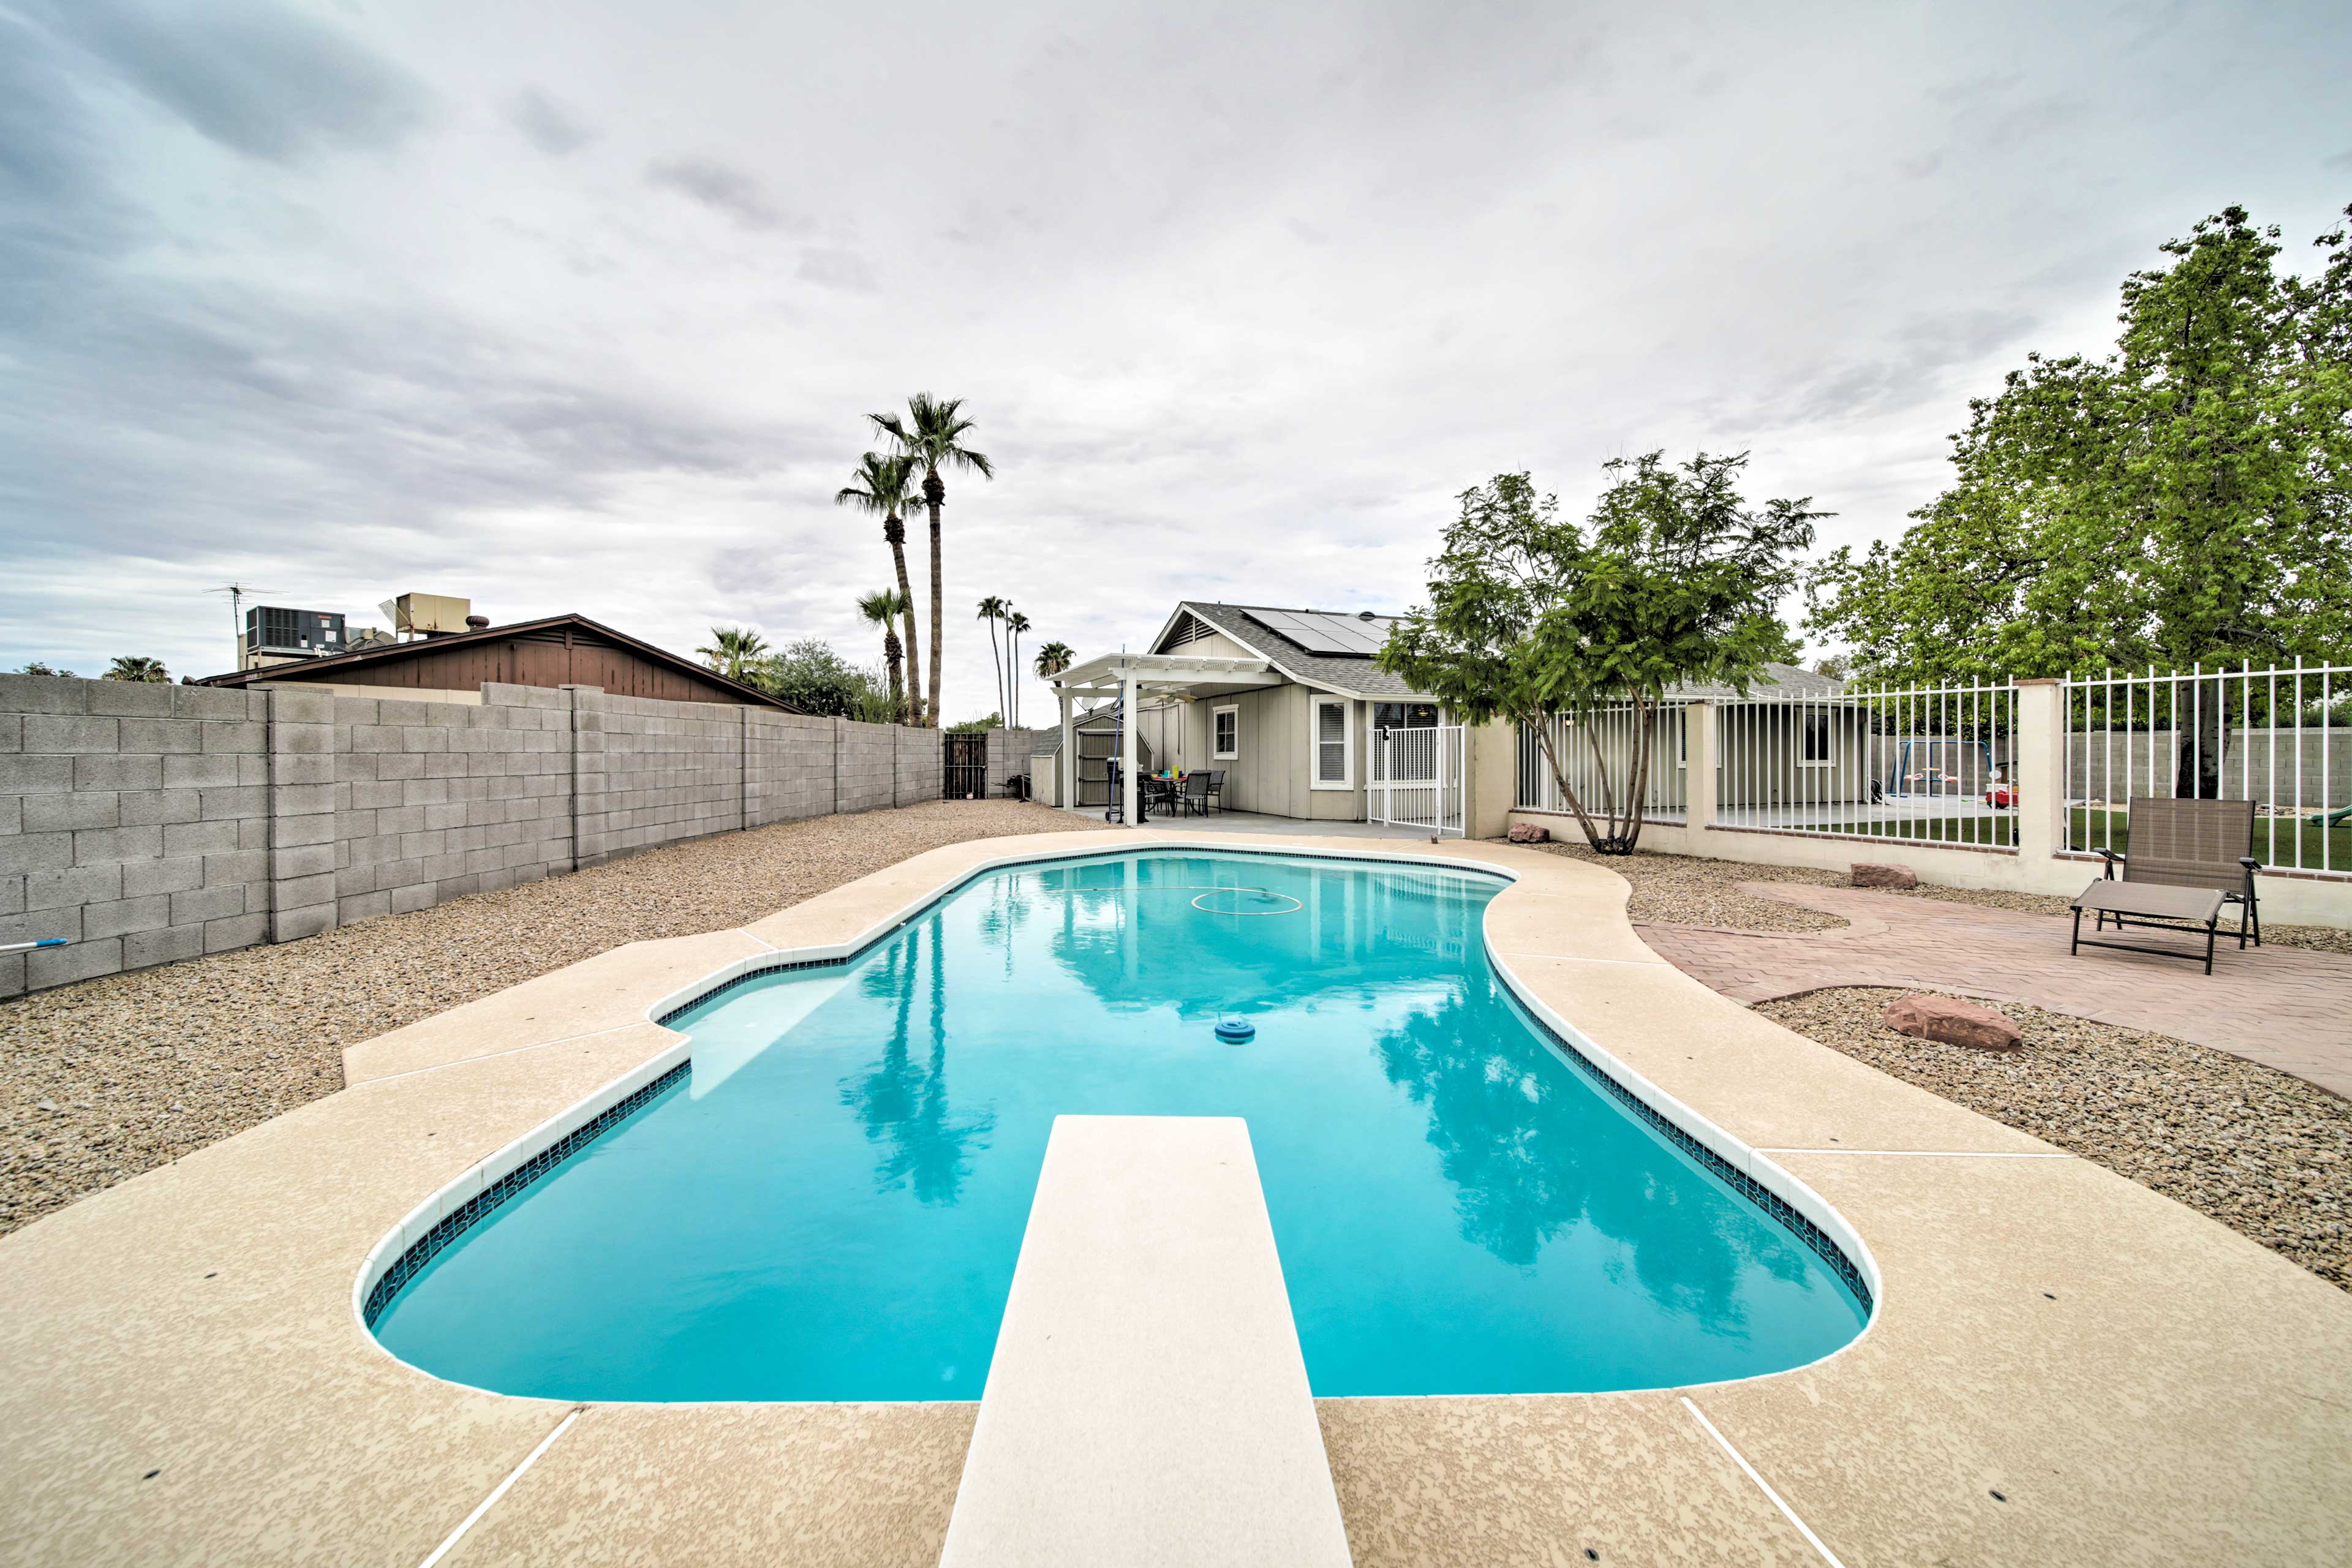 Property Image 2 - Family Home w/Pool + Patio: 18 Mi to DWTN Phoenix